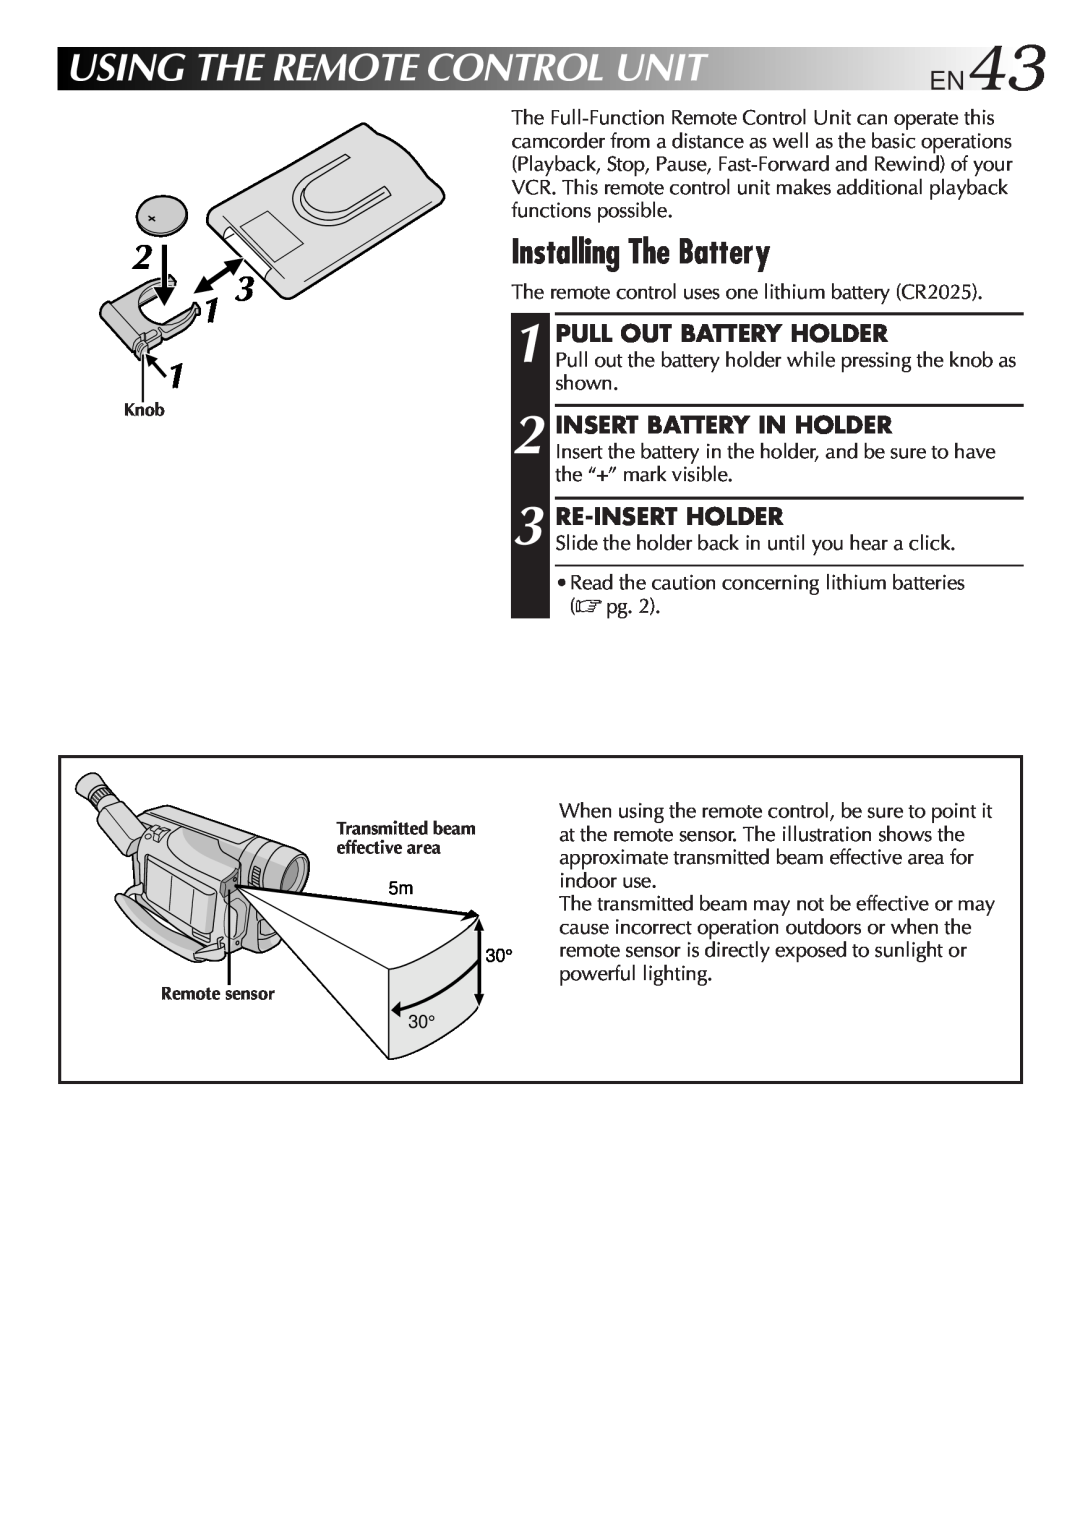 JVC LYT0242-001A USINGTHEREMOTECONTROLUNITEN43, Installing The Battery, Pull Out Battery Holder, Insert Battery In Holder 